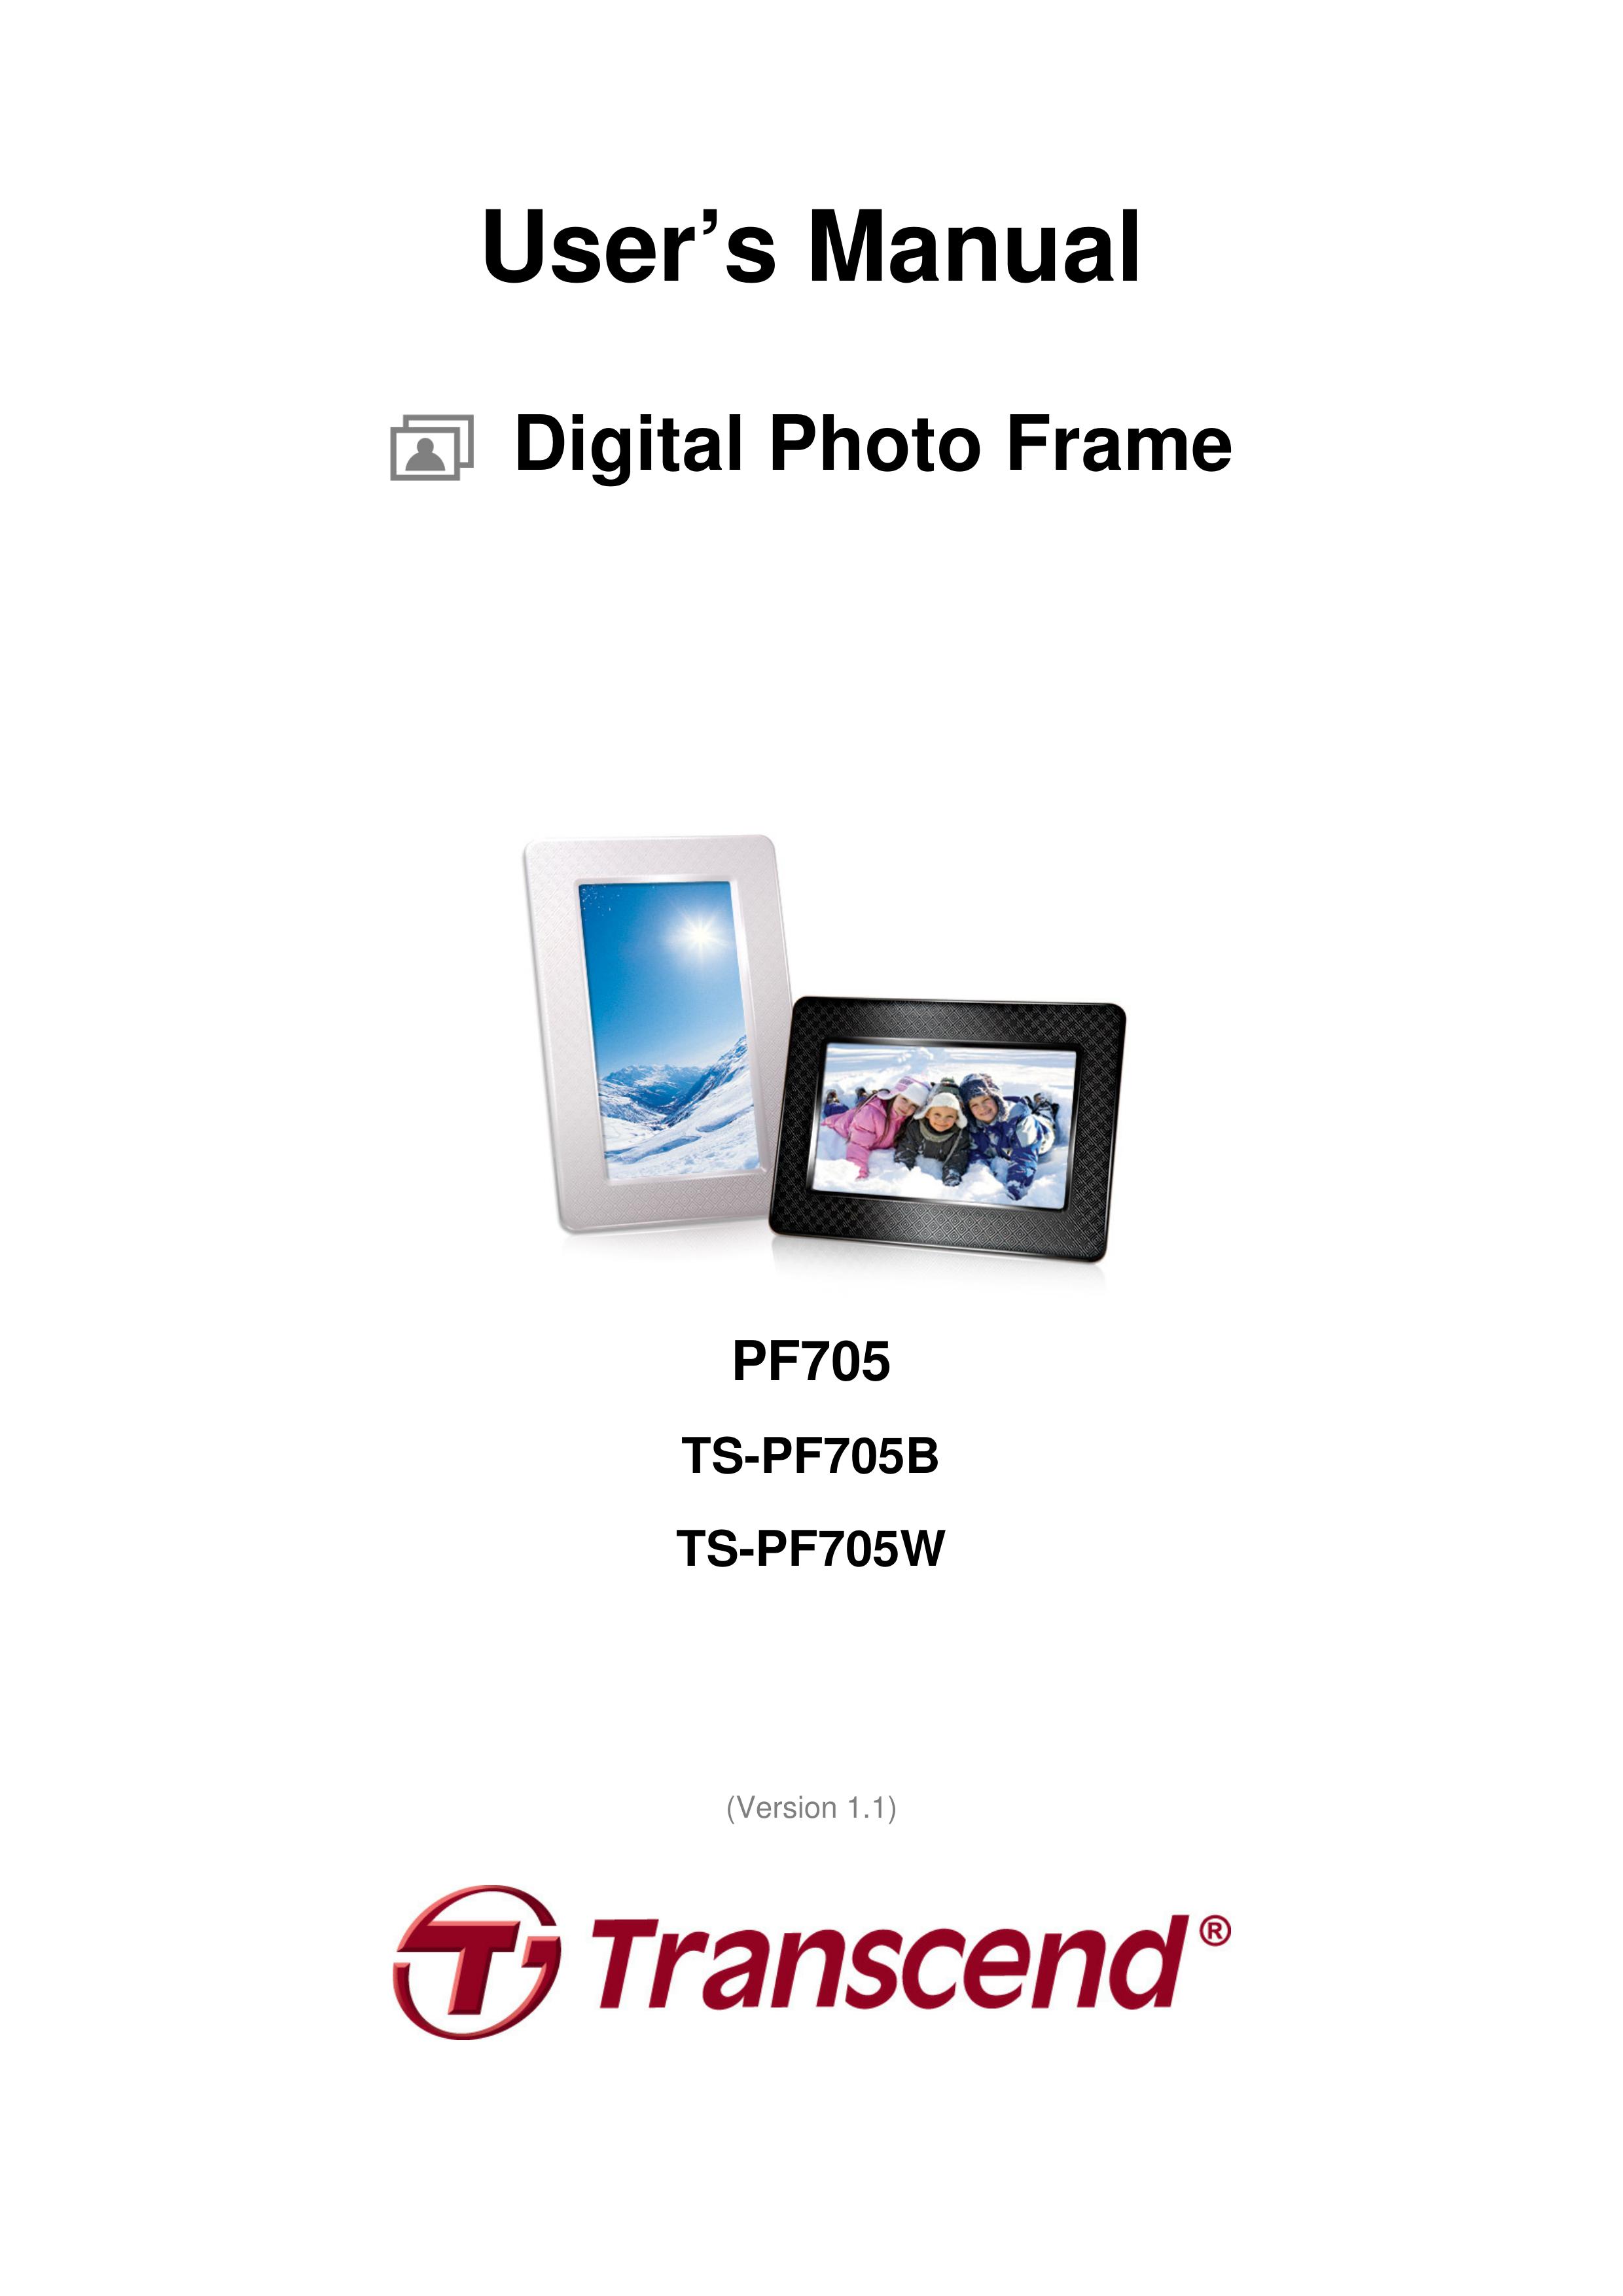 Transcend Information TS-PF705B Digital Photo Frame User Manual